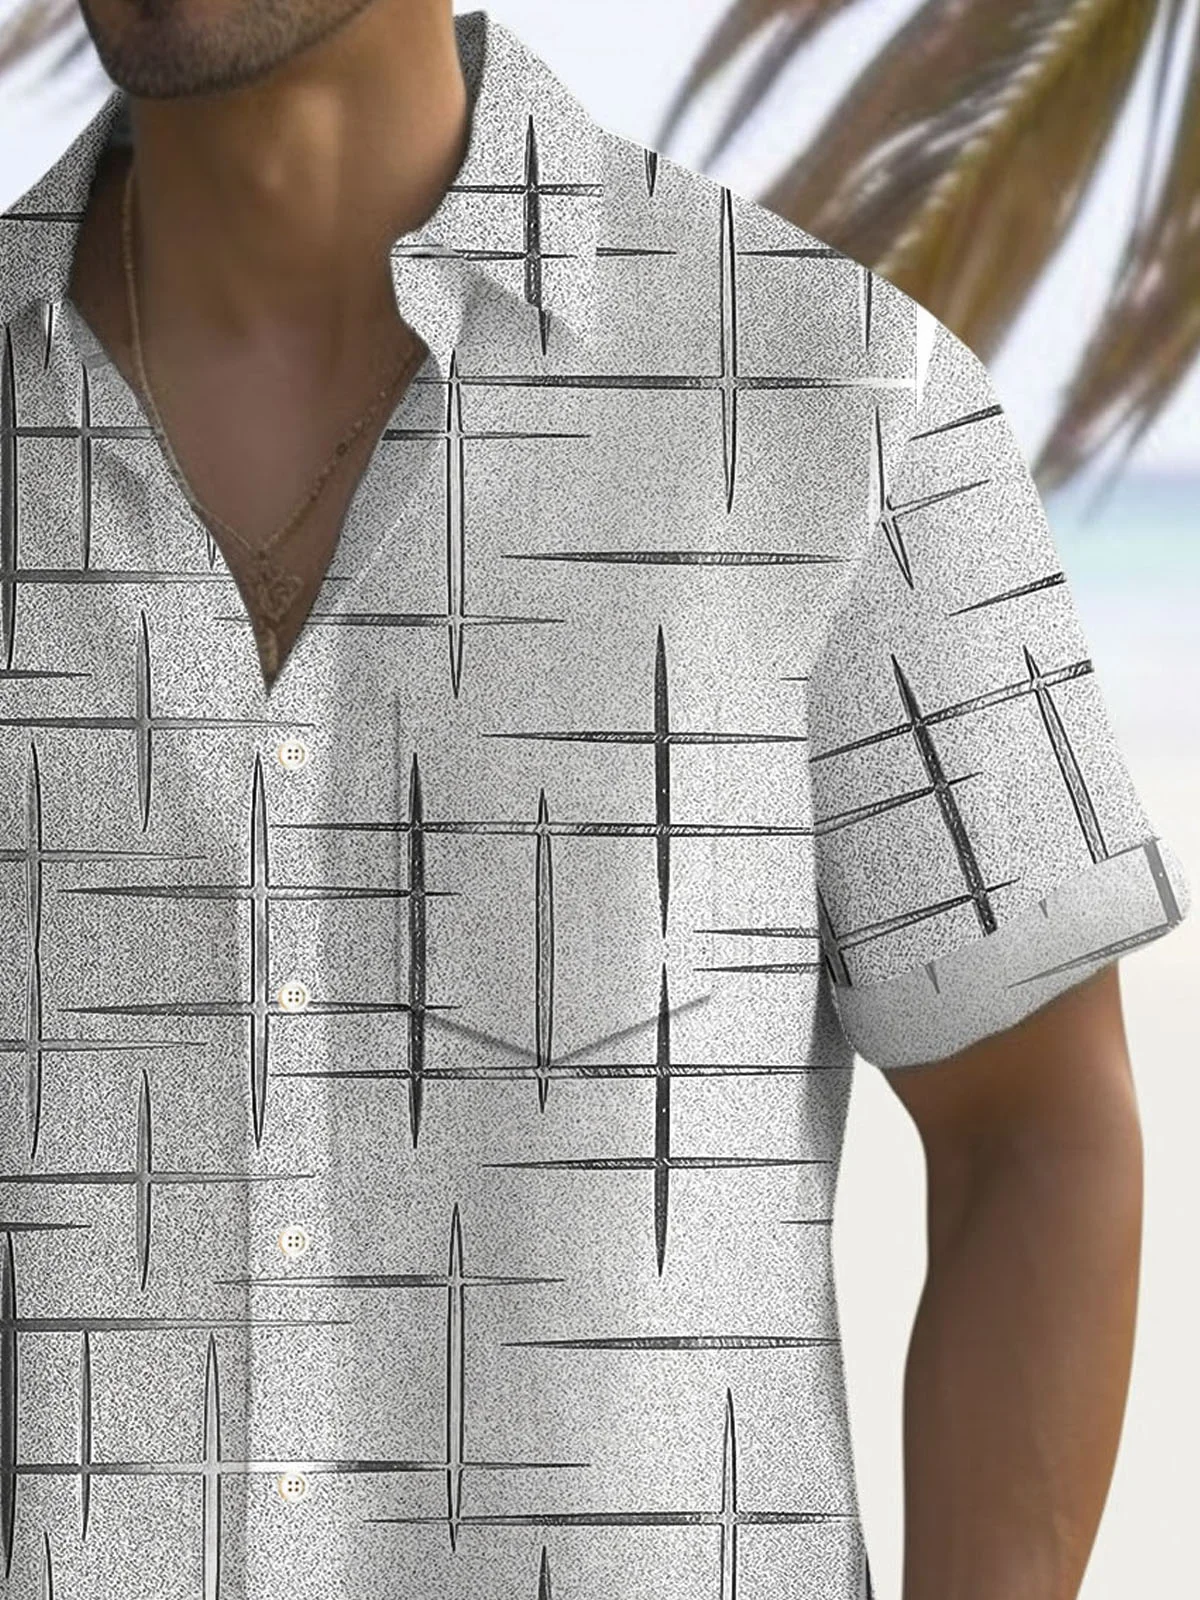 Royaura® Retro Geometric Textured Silver 3D Print Men's Button Pocket Short Sleeve Shirt